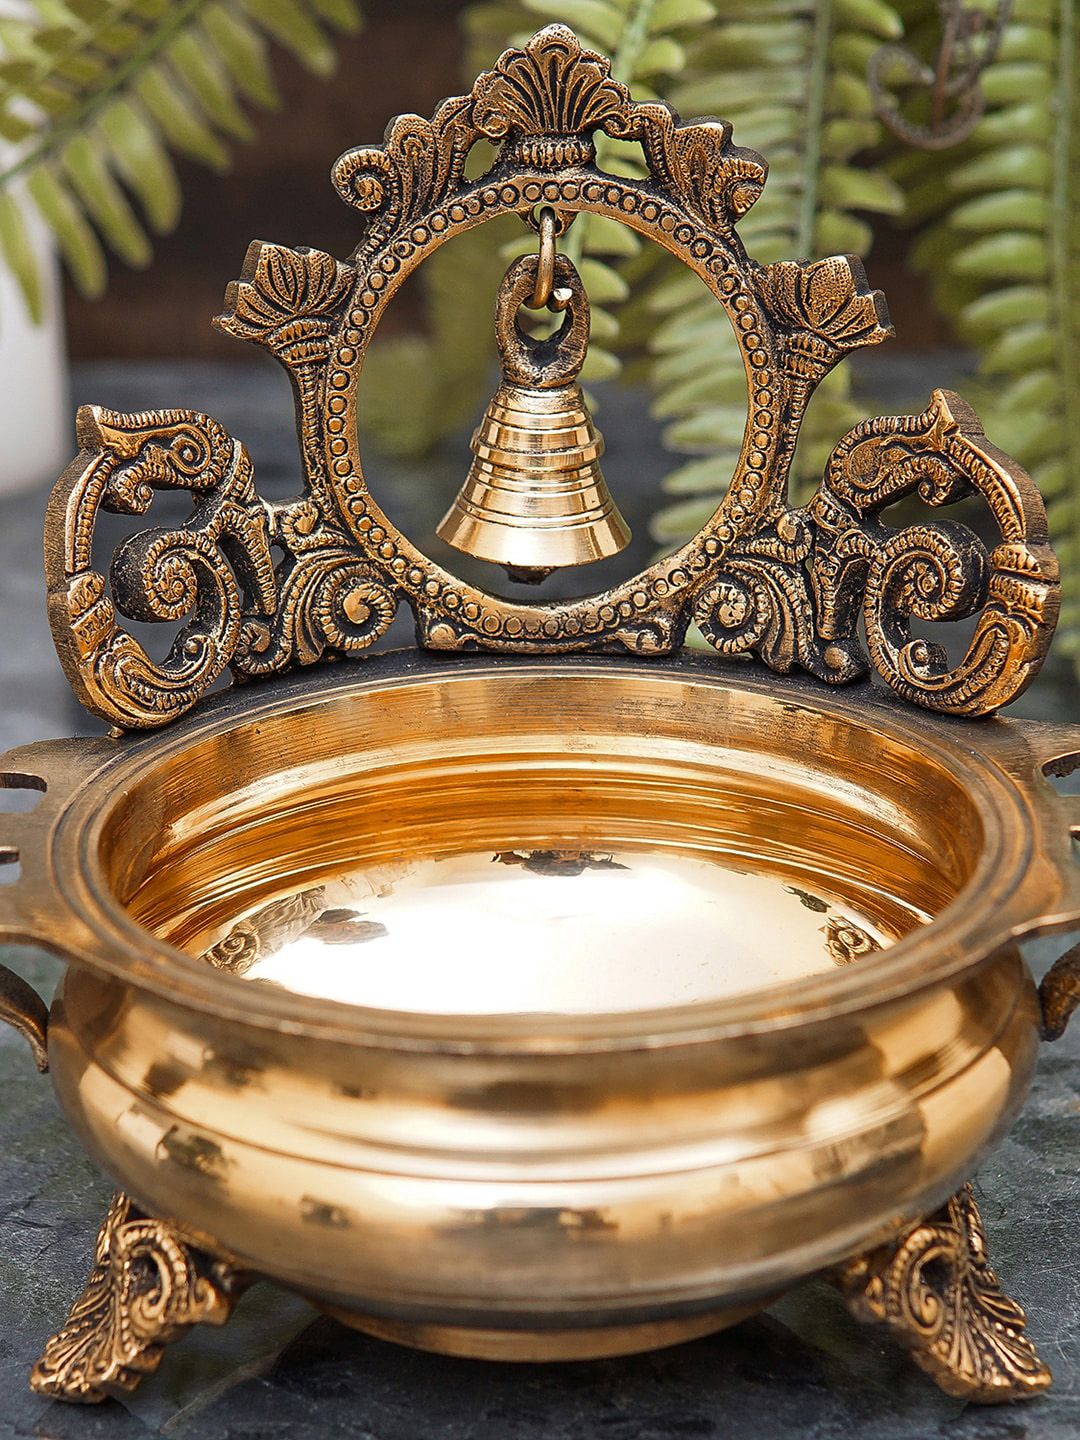 StatueStudio Brass Decorative Urli Bowl Showpiece Price in India